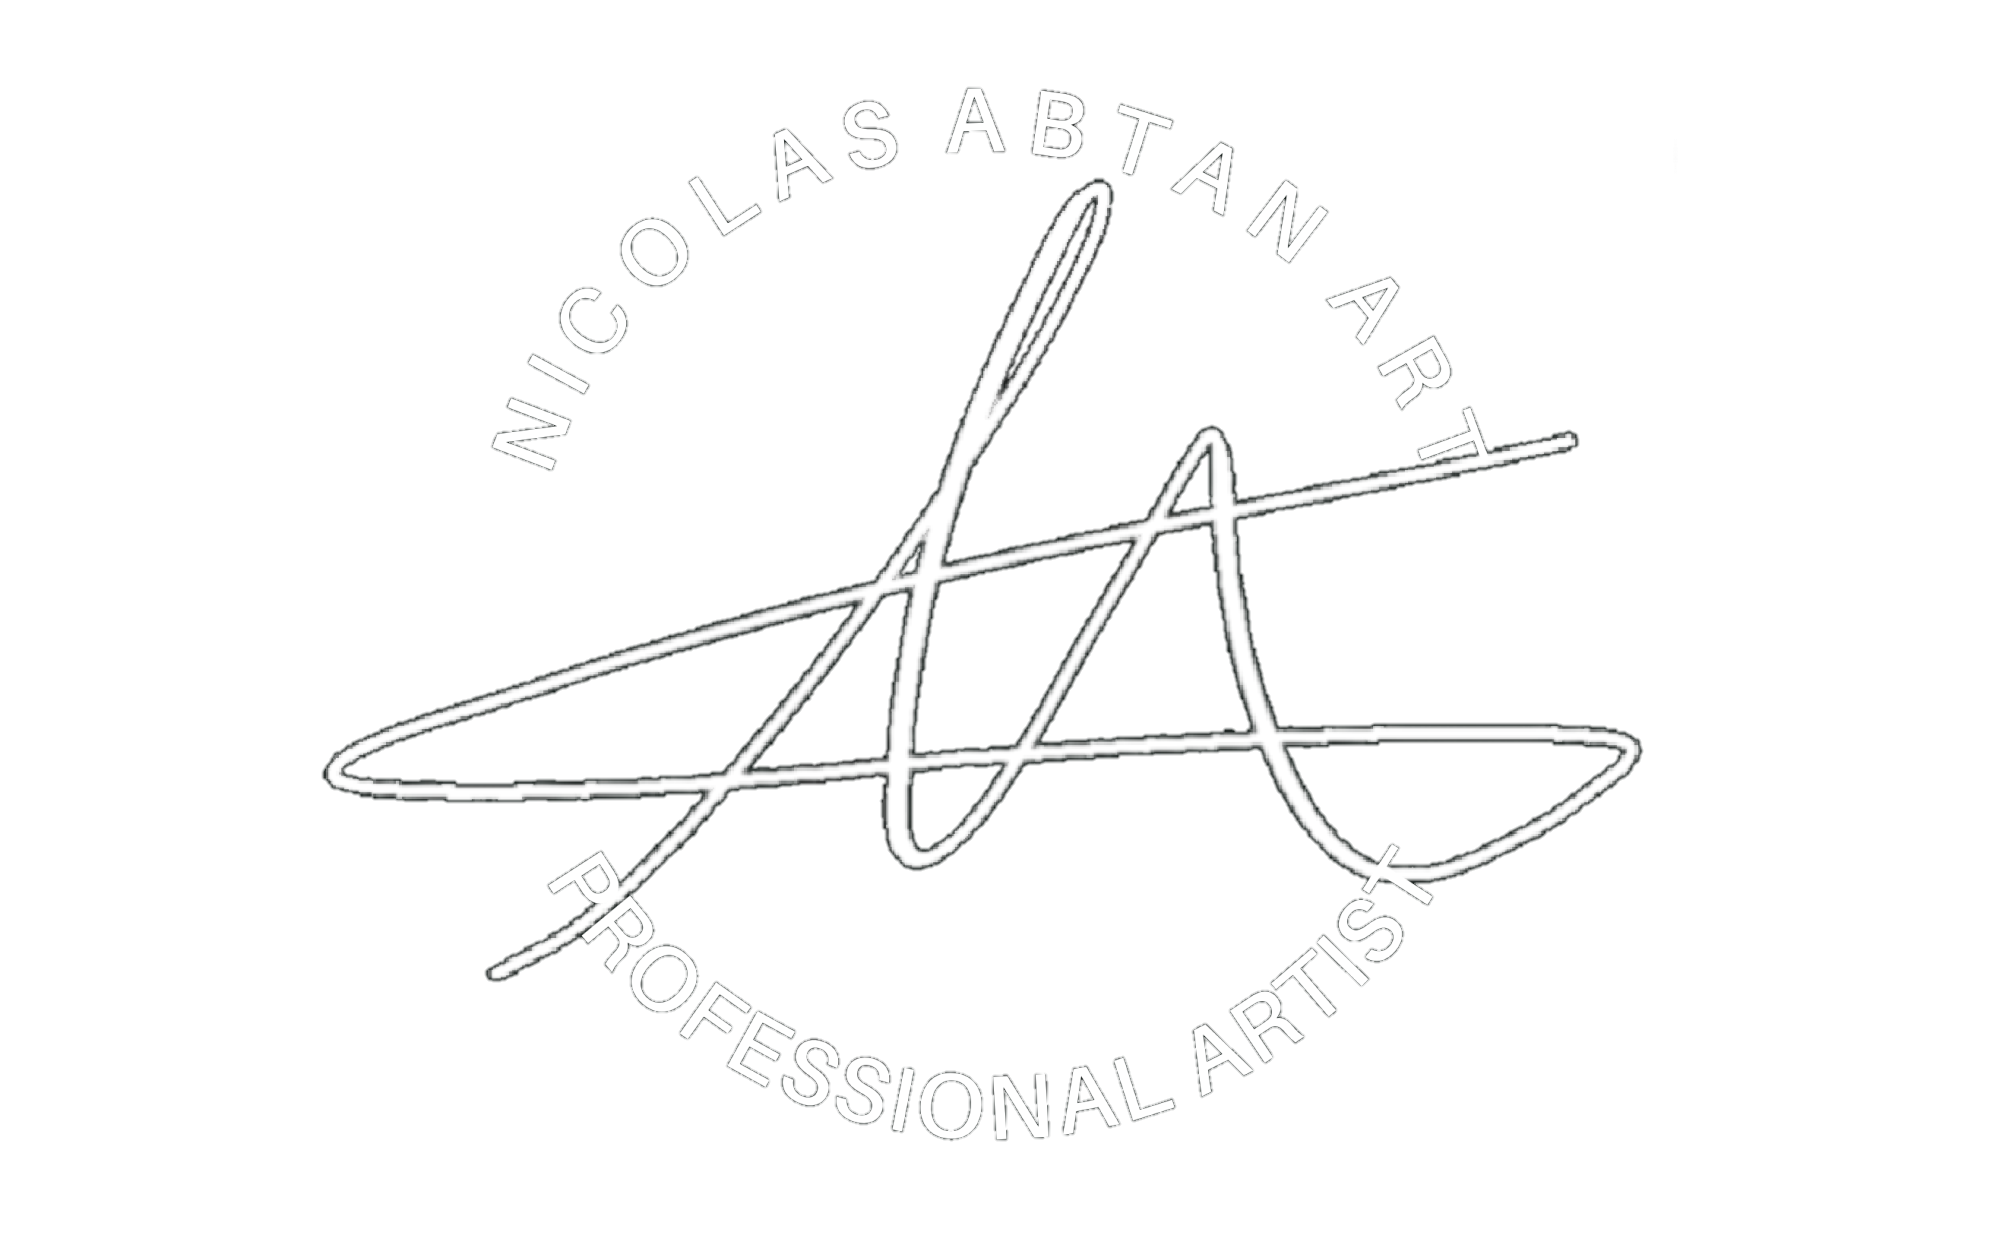 Nicolas Abtan Art 